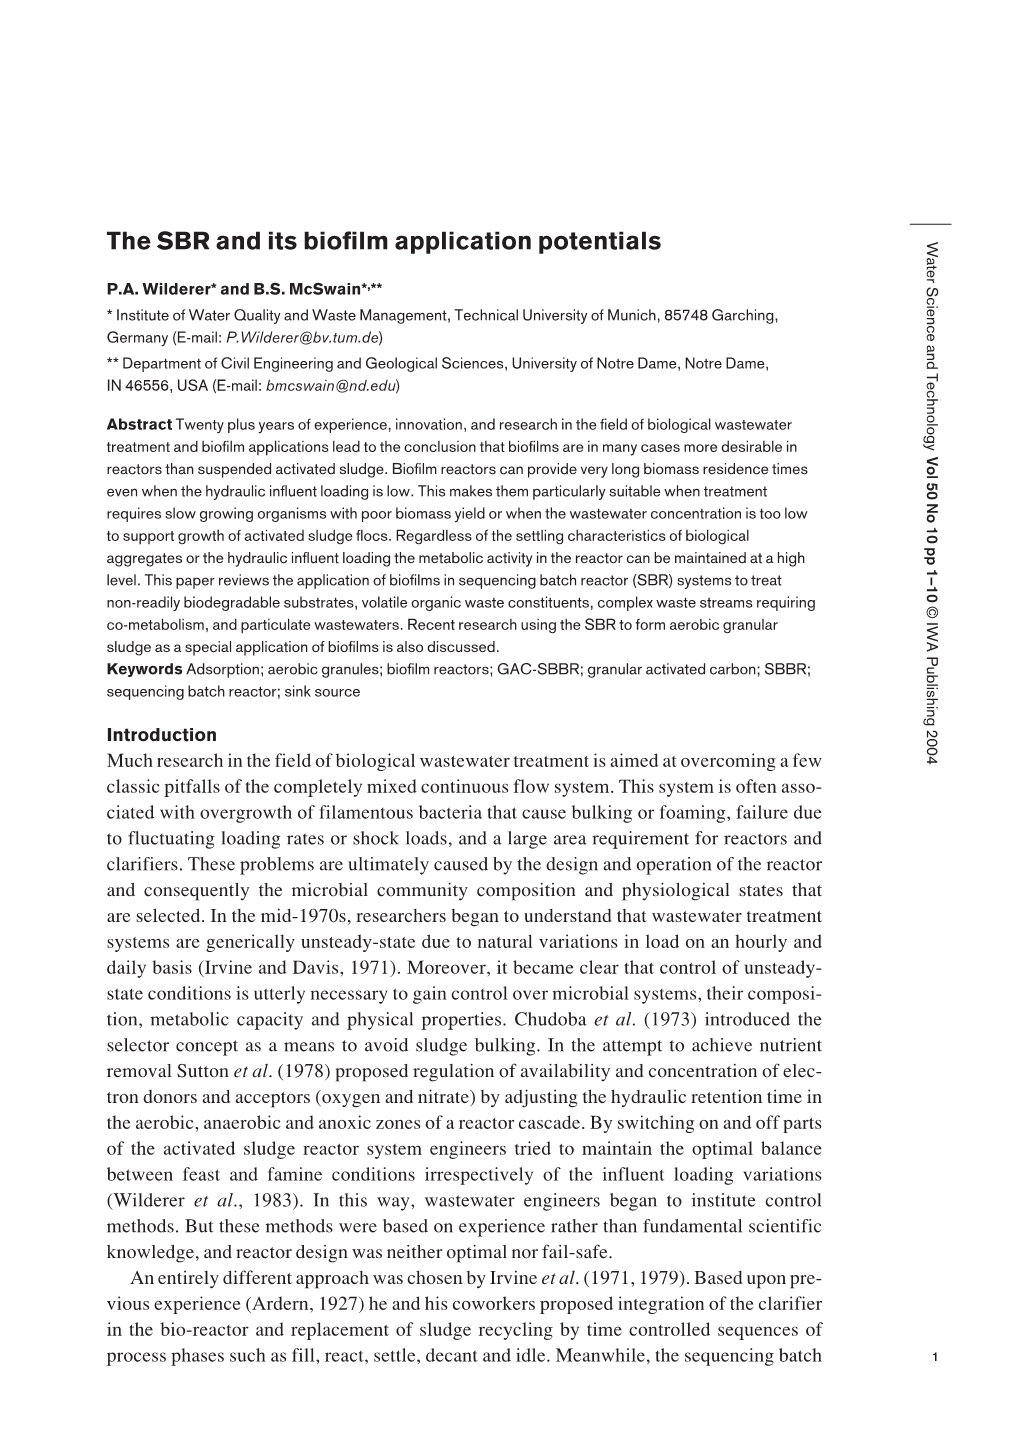 The SBR and Its Biofilm Application Potentials